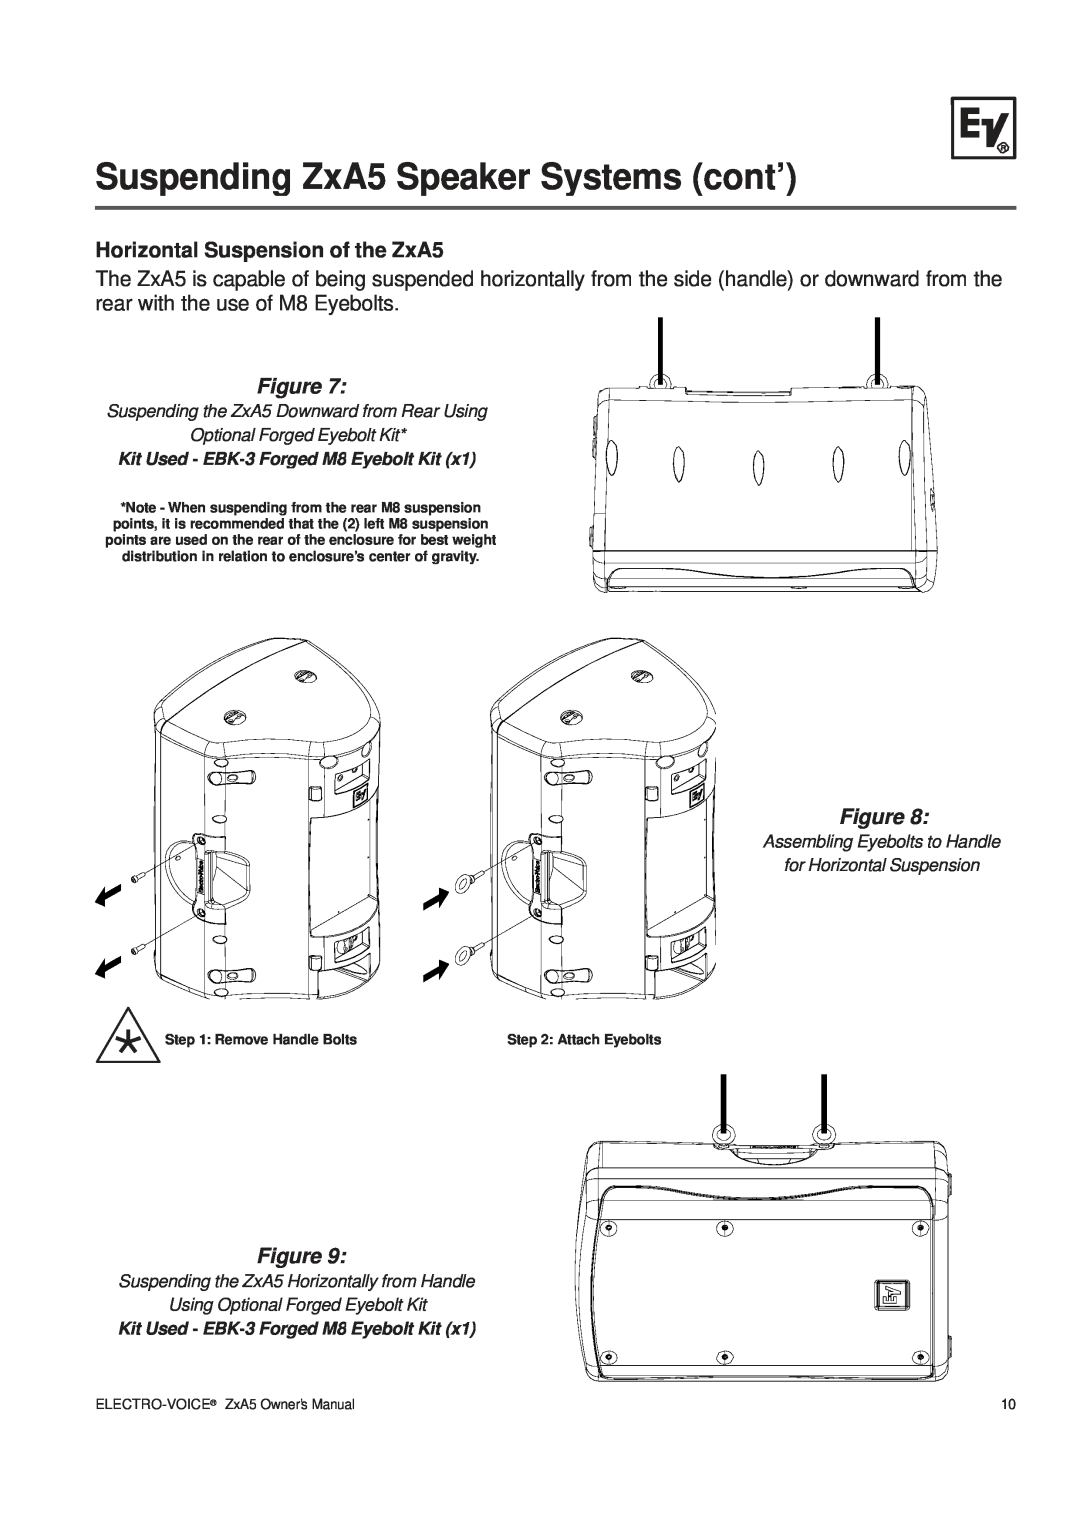 Pentax ZXA5-90 Horizontal Suspension of the ZxA5, Suspending ZxA5 Speaker Systems cont’, Optional Forged Eyebolt Kit 